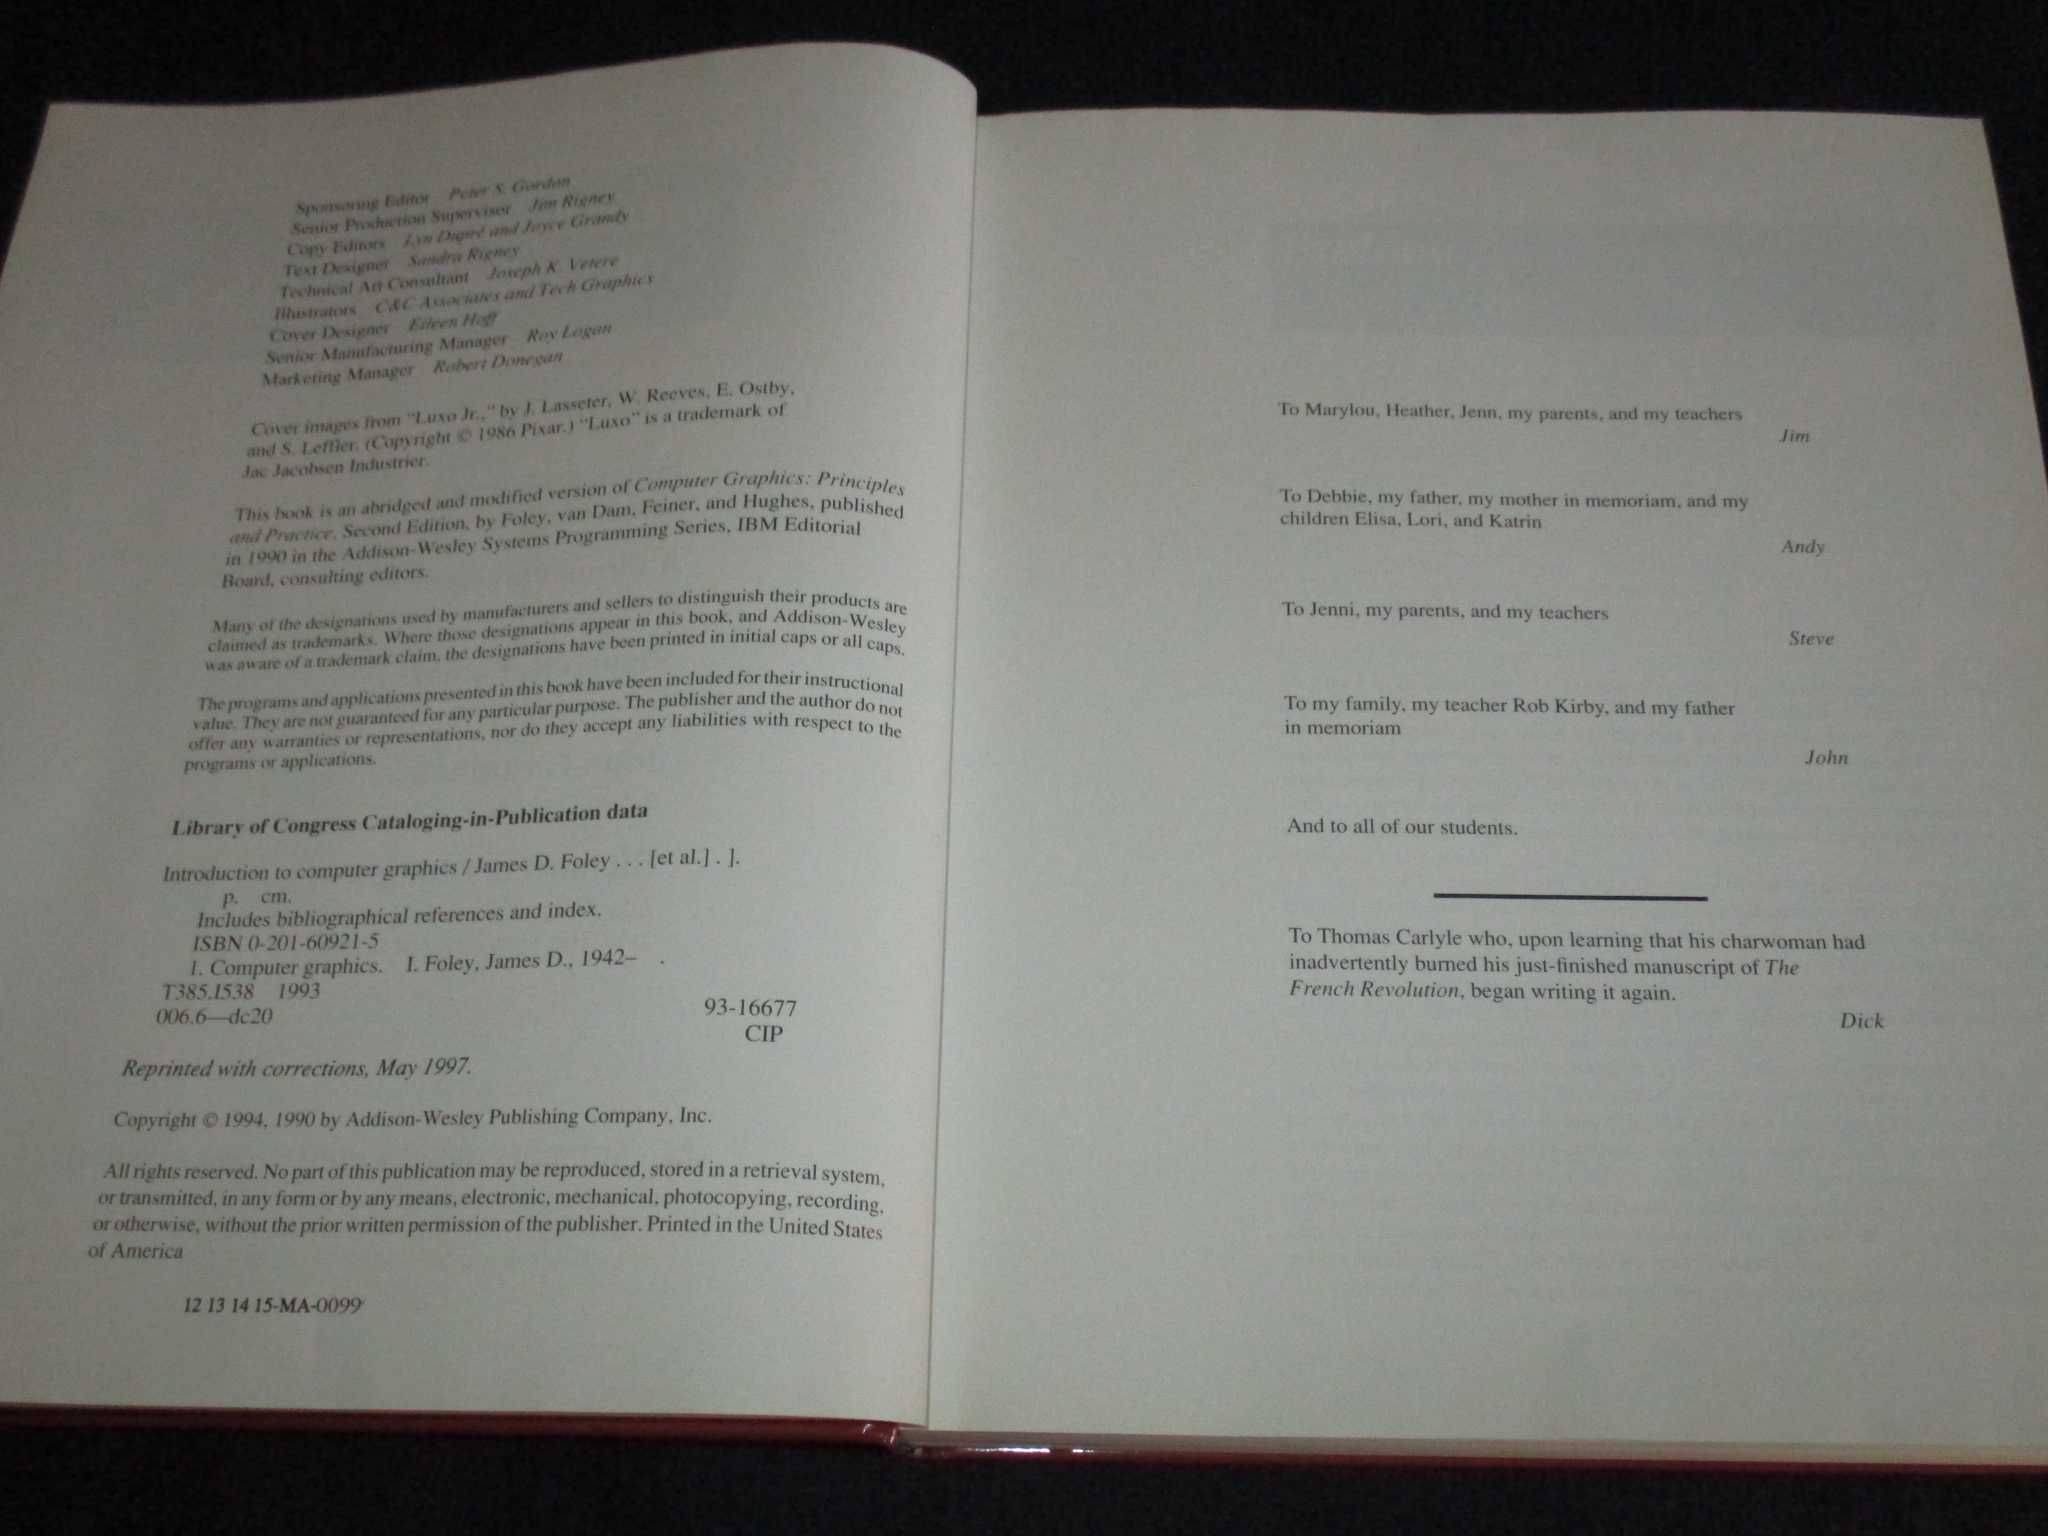 Livro Introduction to Computer Graphics capa dura